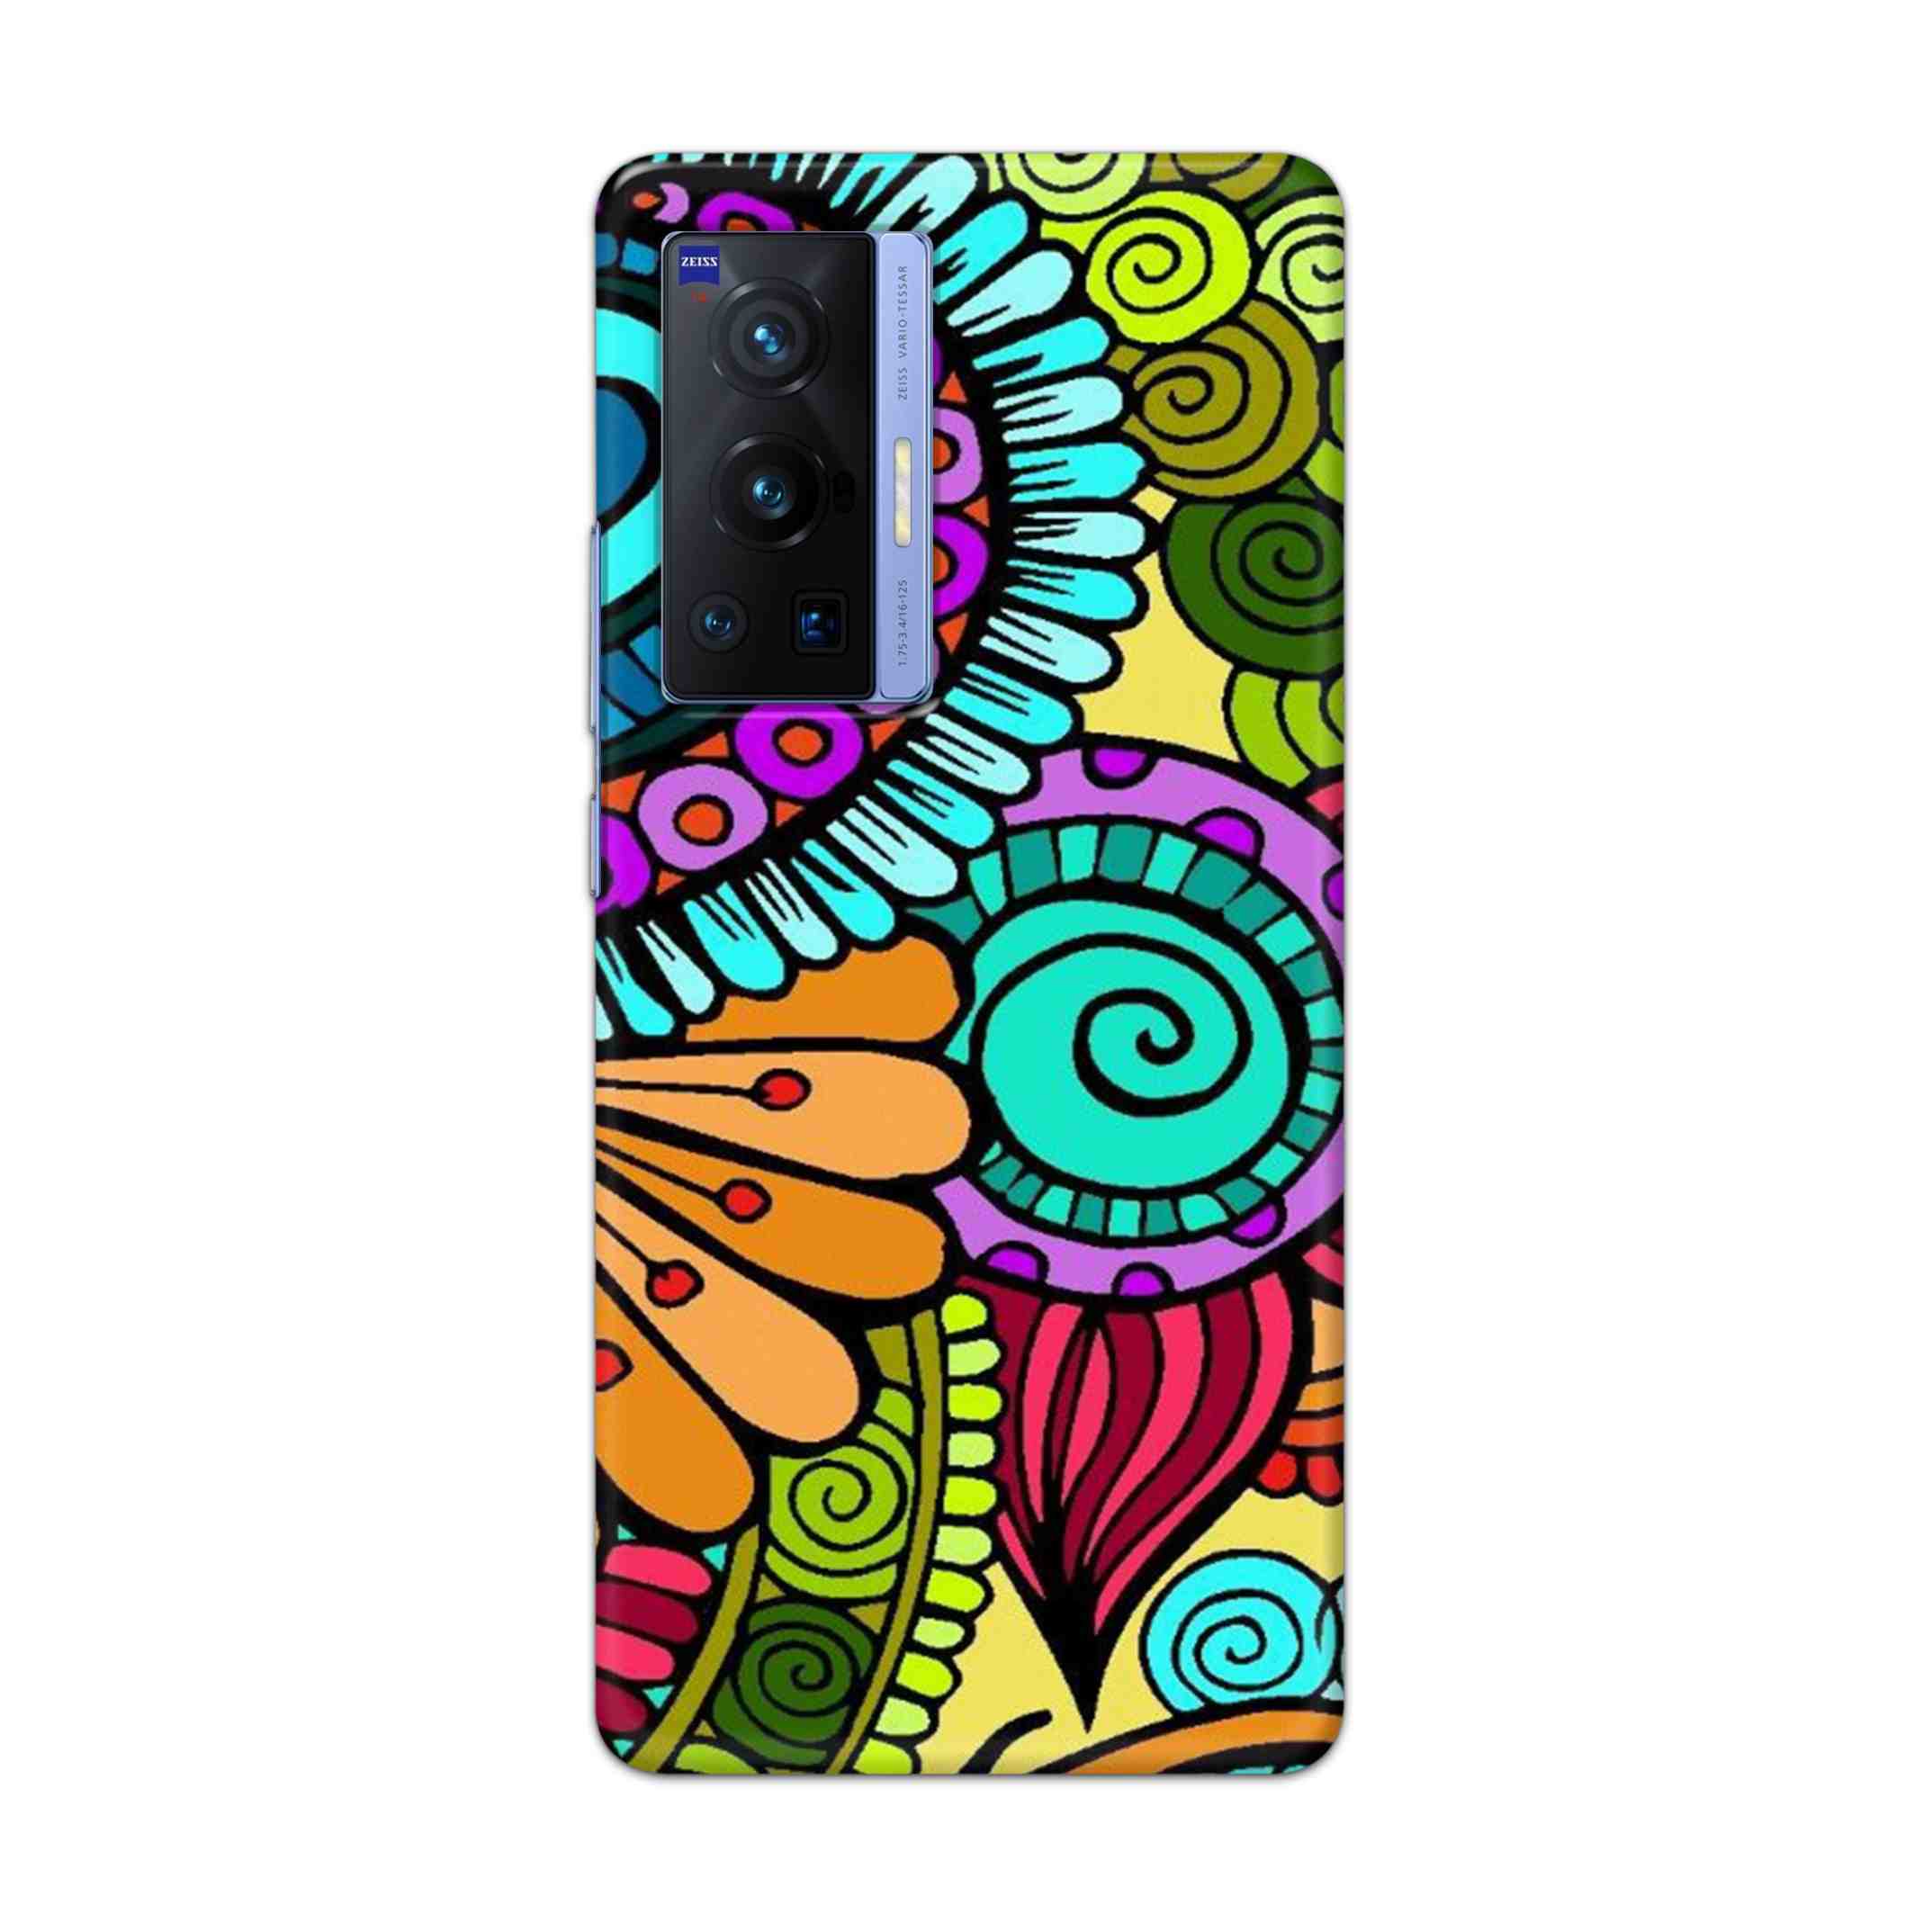 Buy The Kalachakra Mandala Hard Back Mobile Phone Case Cover For Vivo X70 Pro Online